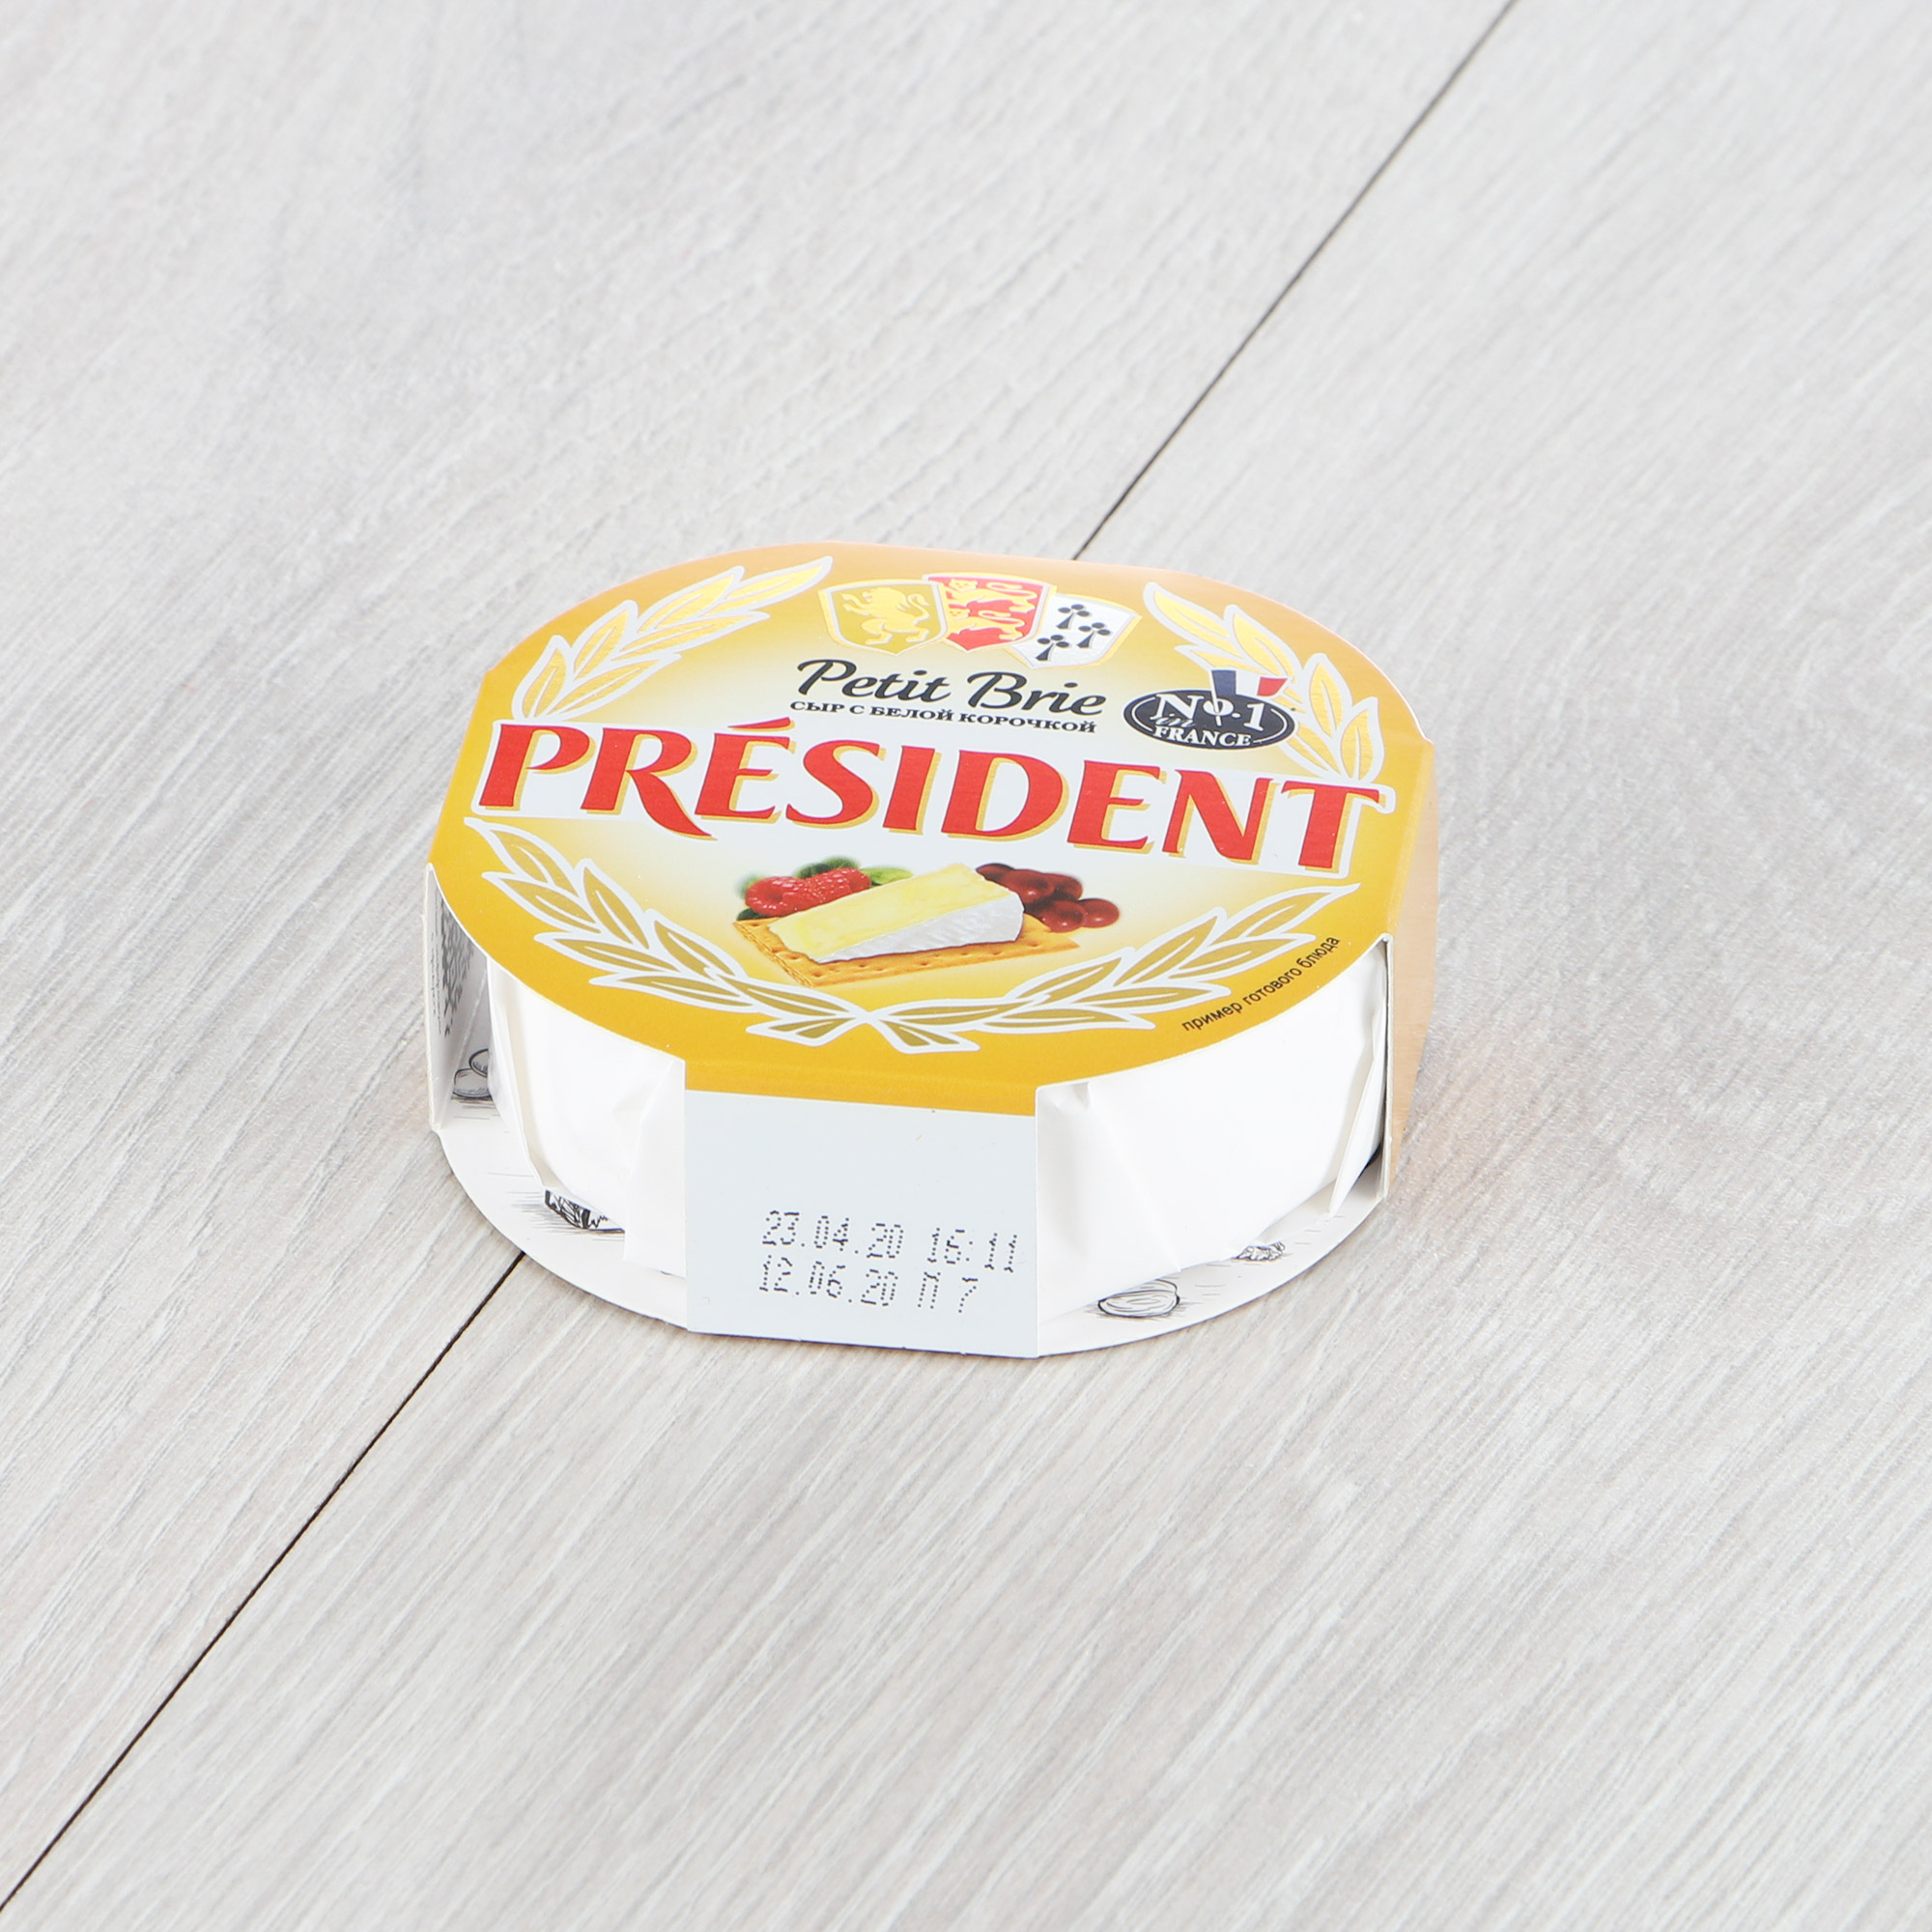 Сыр President Petit Brie мягкий с белой плесенью 60%  125 г - фото 1